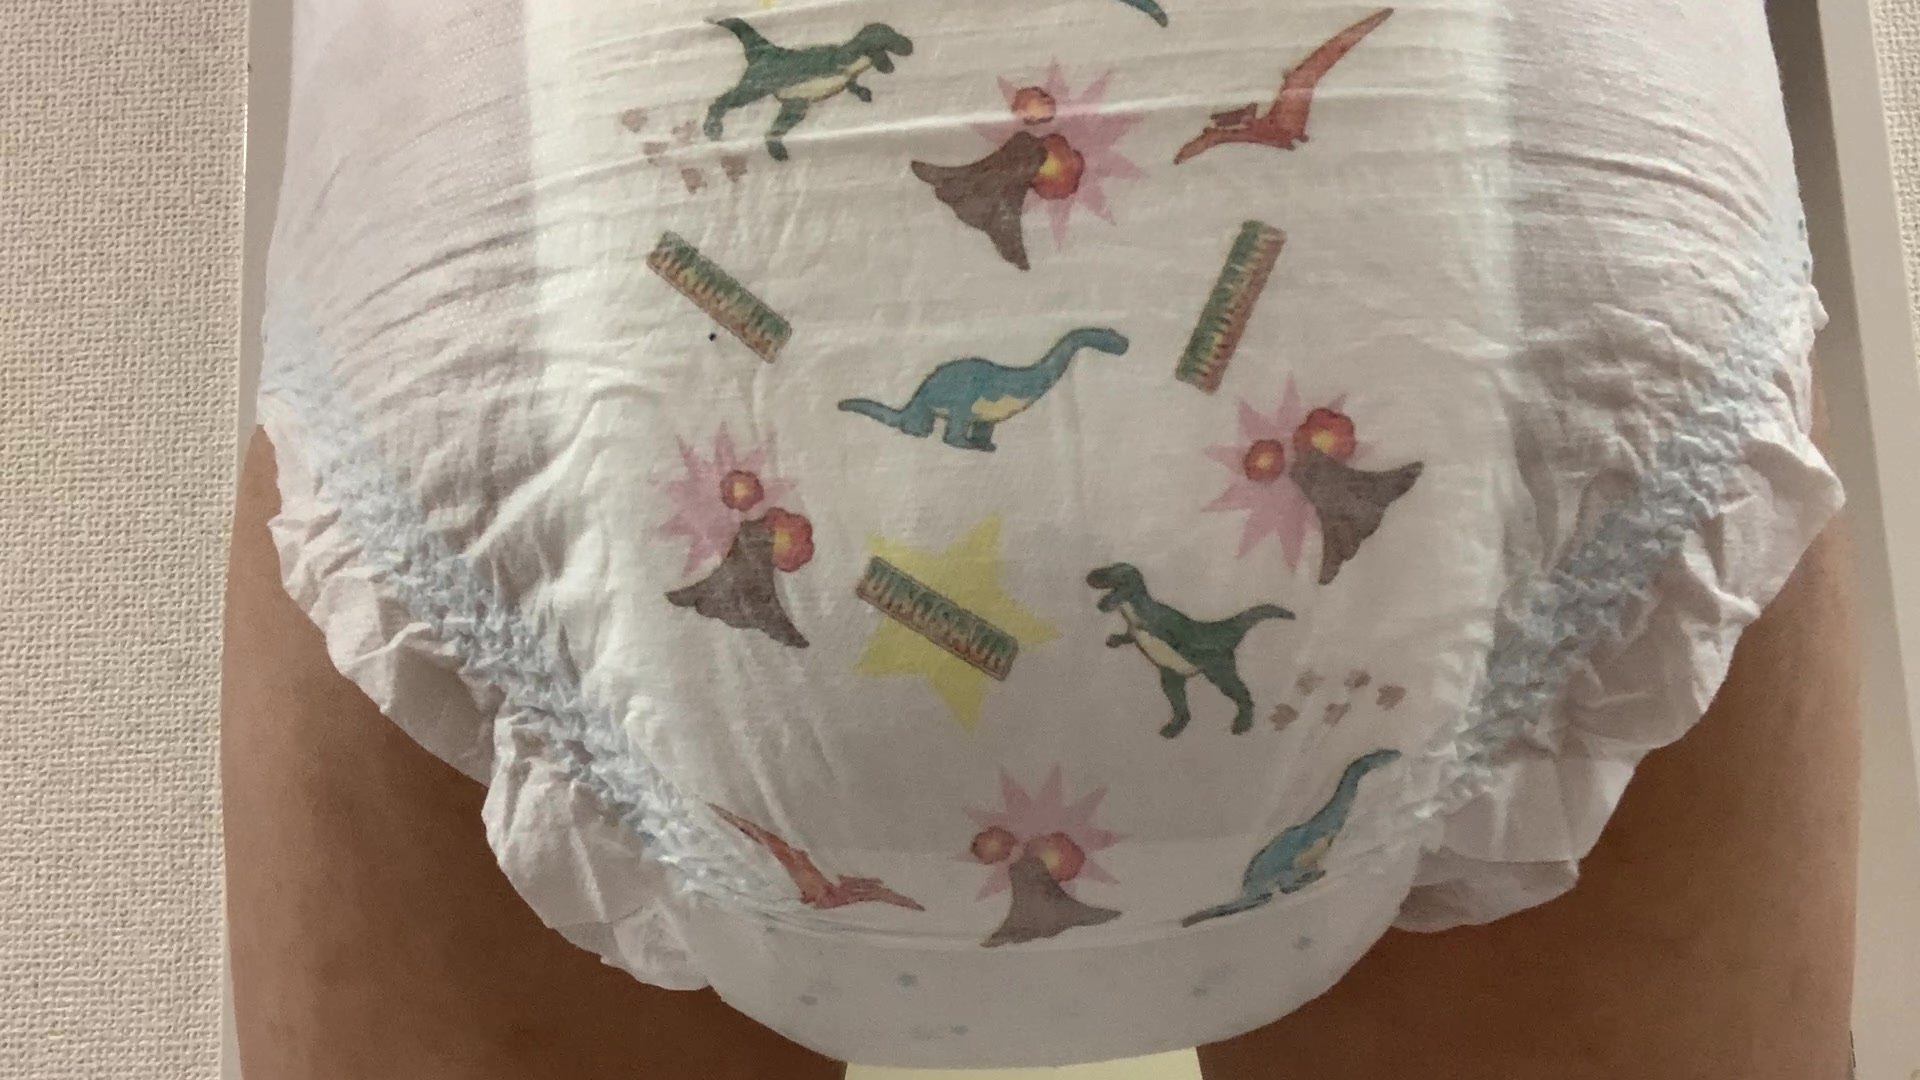 second poop in a dinosaur diaper